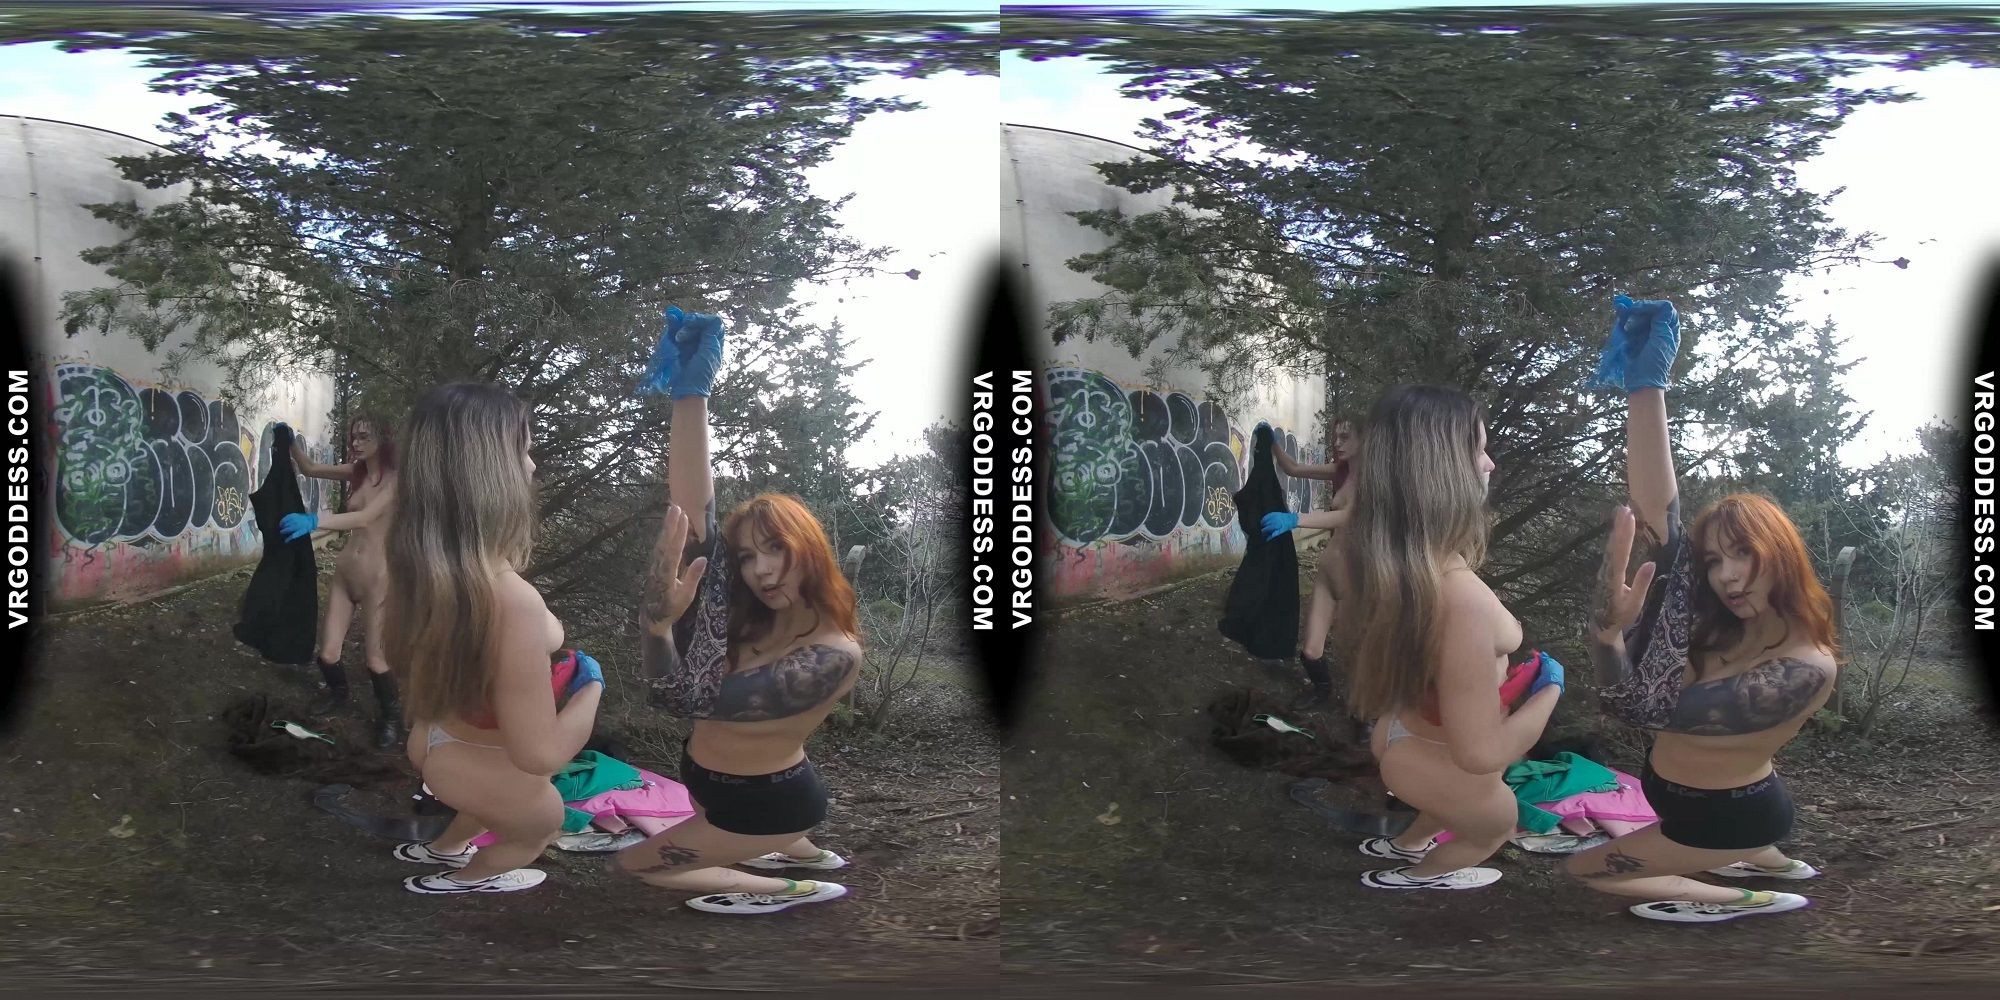 Nude Graffiti Painting Girls Cheri Josie Poppy Love Tagging Naked Outdoors Slideshow